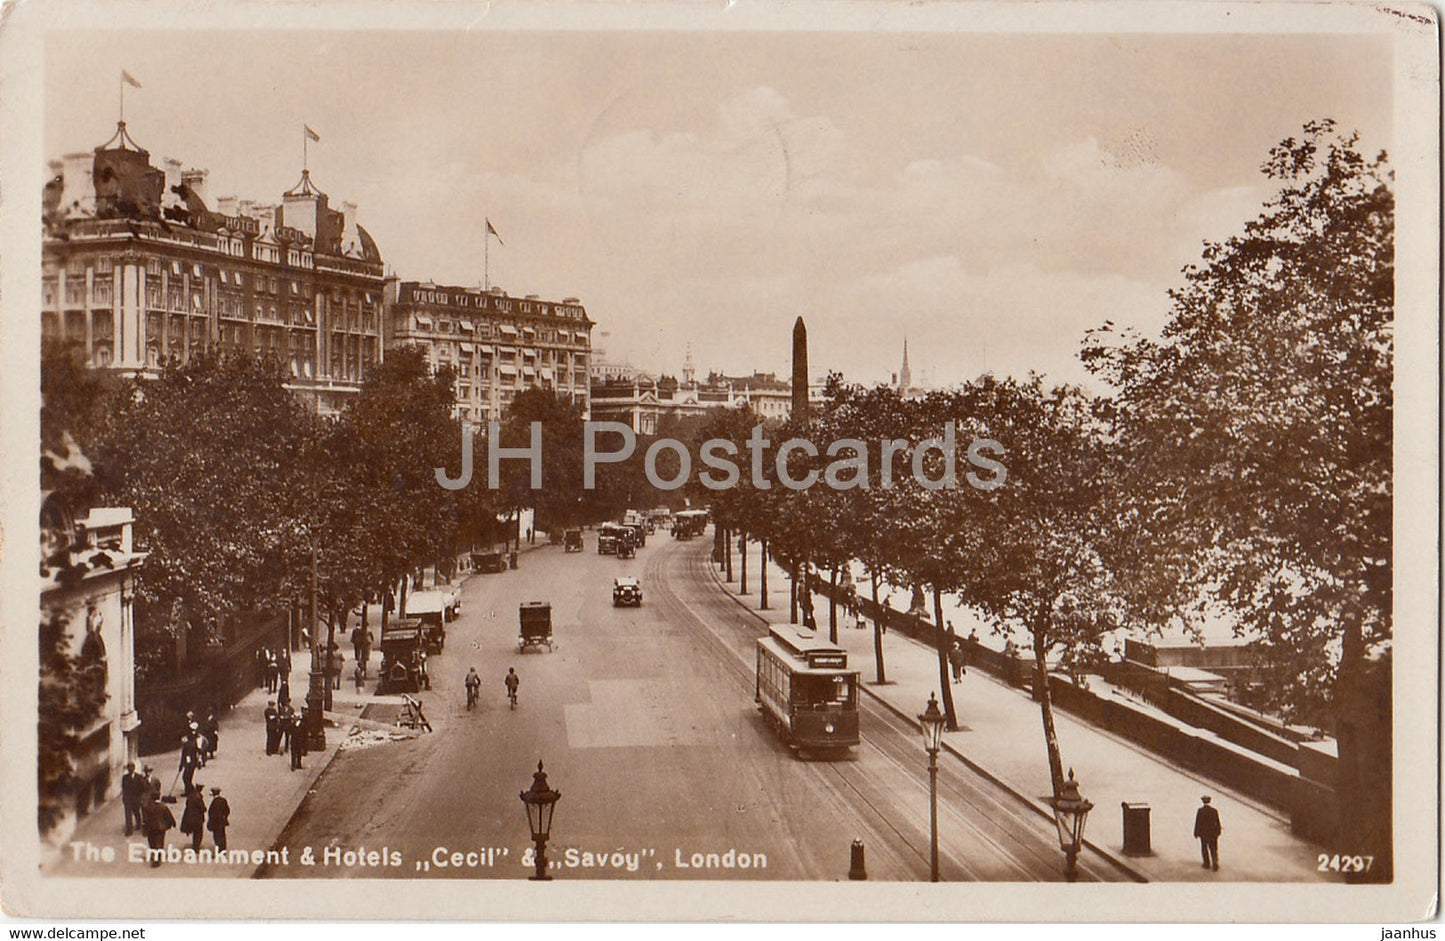 London - The Embankment & Hotels Cecil & Savoy - tram - 24297 - old postcard - 1929 - England - United Kingdom - used - JH Postcards